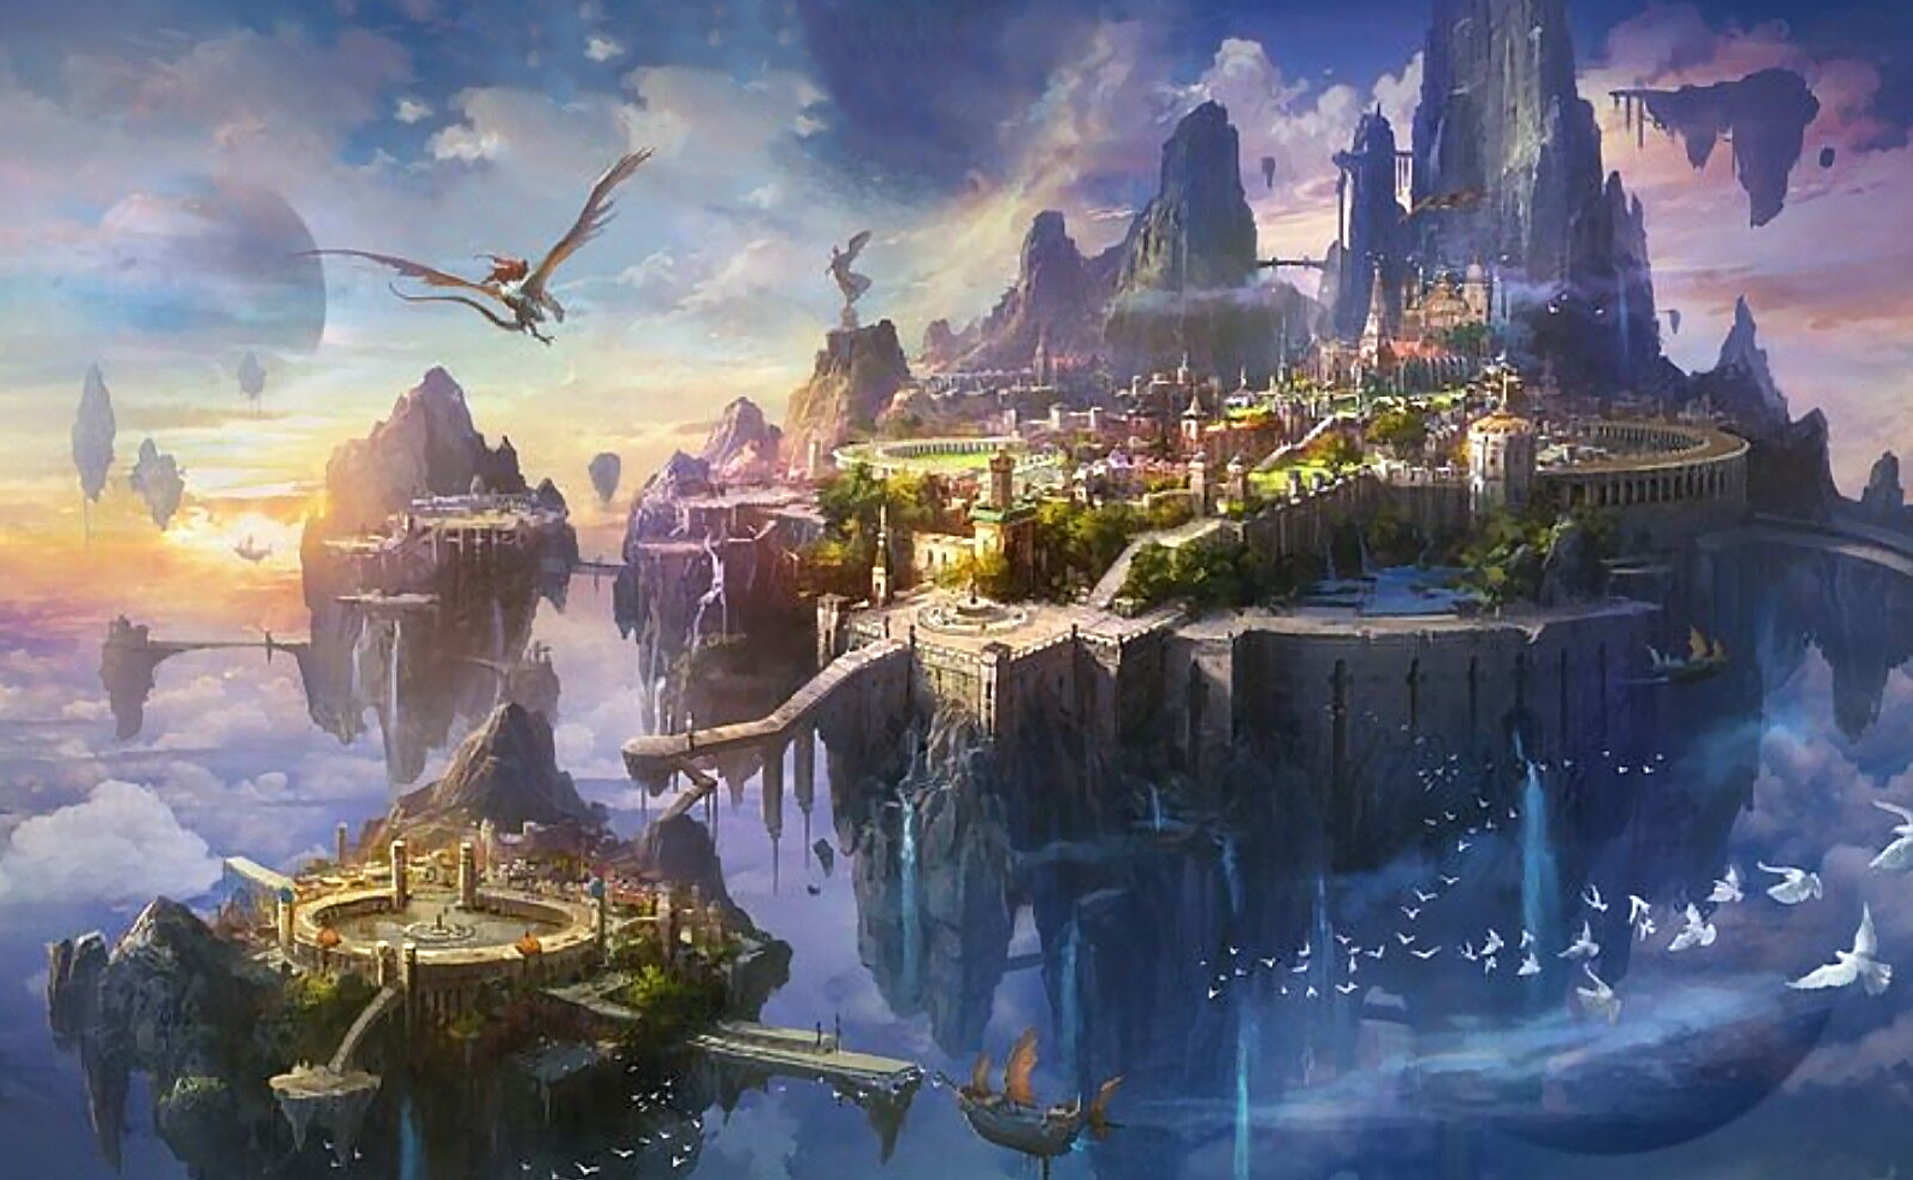 Fantasy world 3. Небесный город Асгард. Королевство Синдрия дворец. Асгард мифология Скандинавии. Асгард город замок.